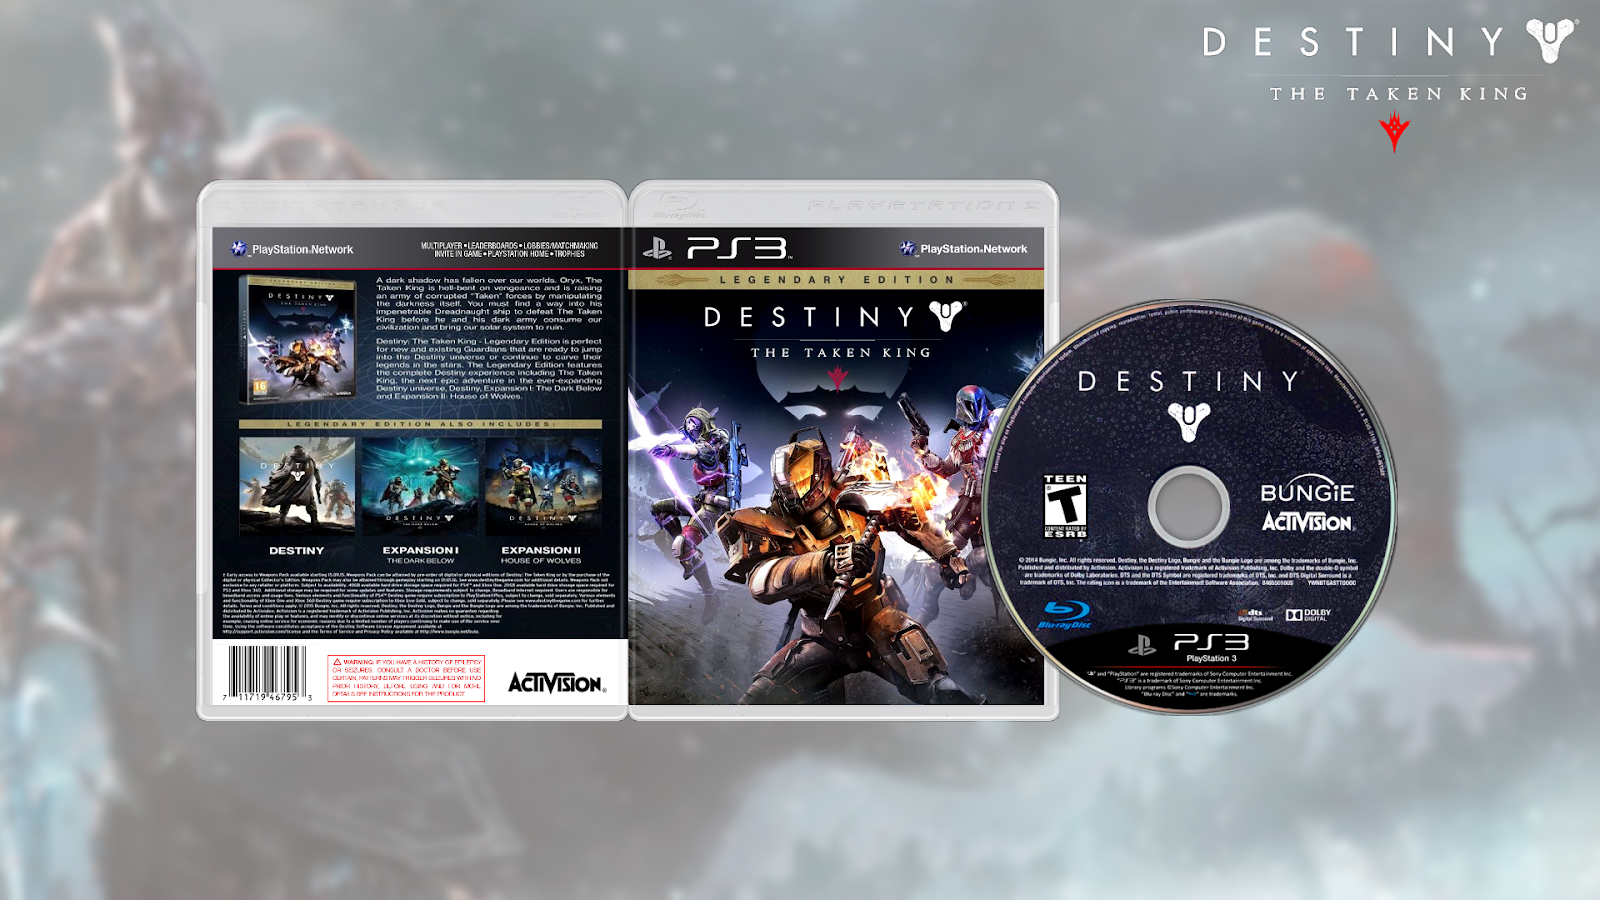 Ps3 code. Destiny: the taken King. Legendary Edition. Destiny 2 диск. Дестини на пс3. Destiny the taken King Xbox 360.